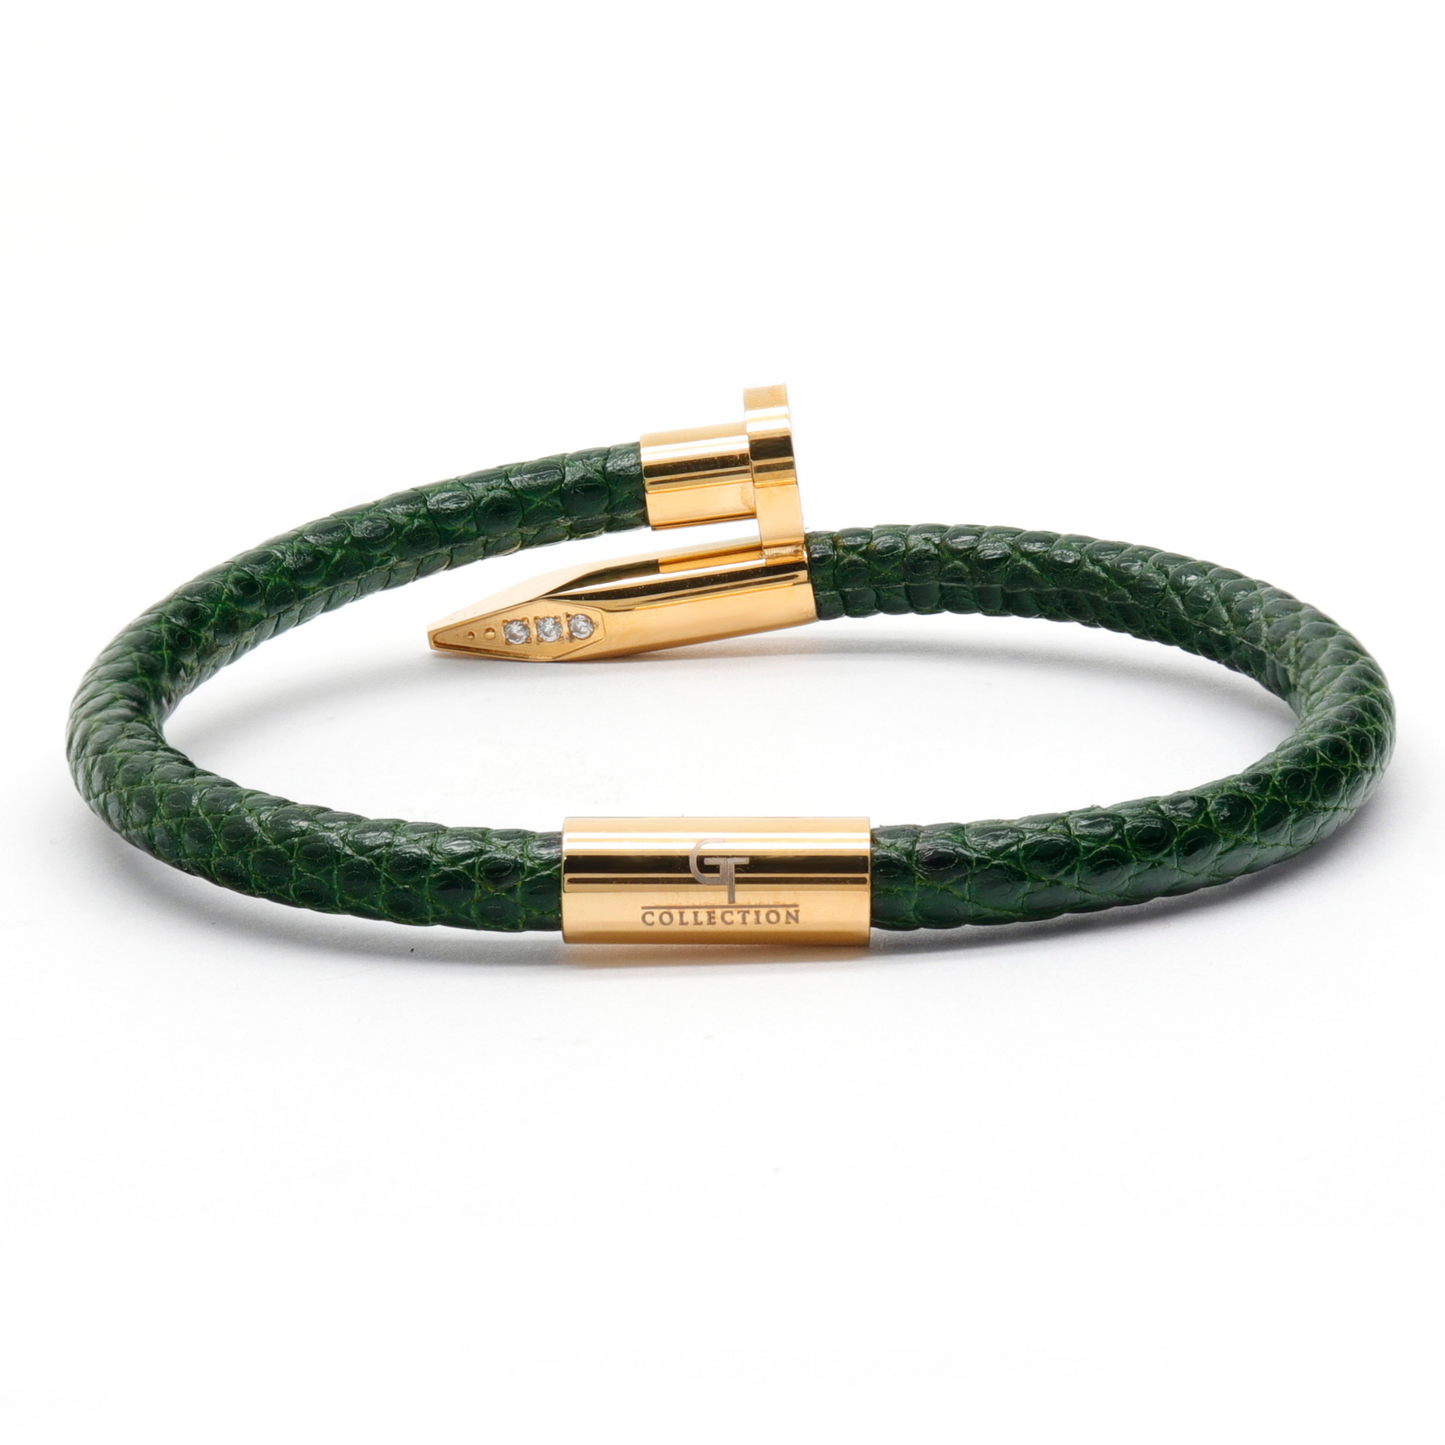 Armband - Grünes Leder mit goldenem Nagel und Zirkondiamant